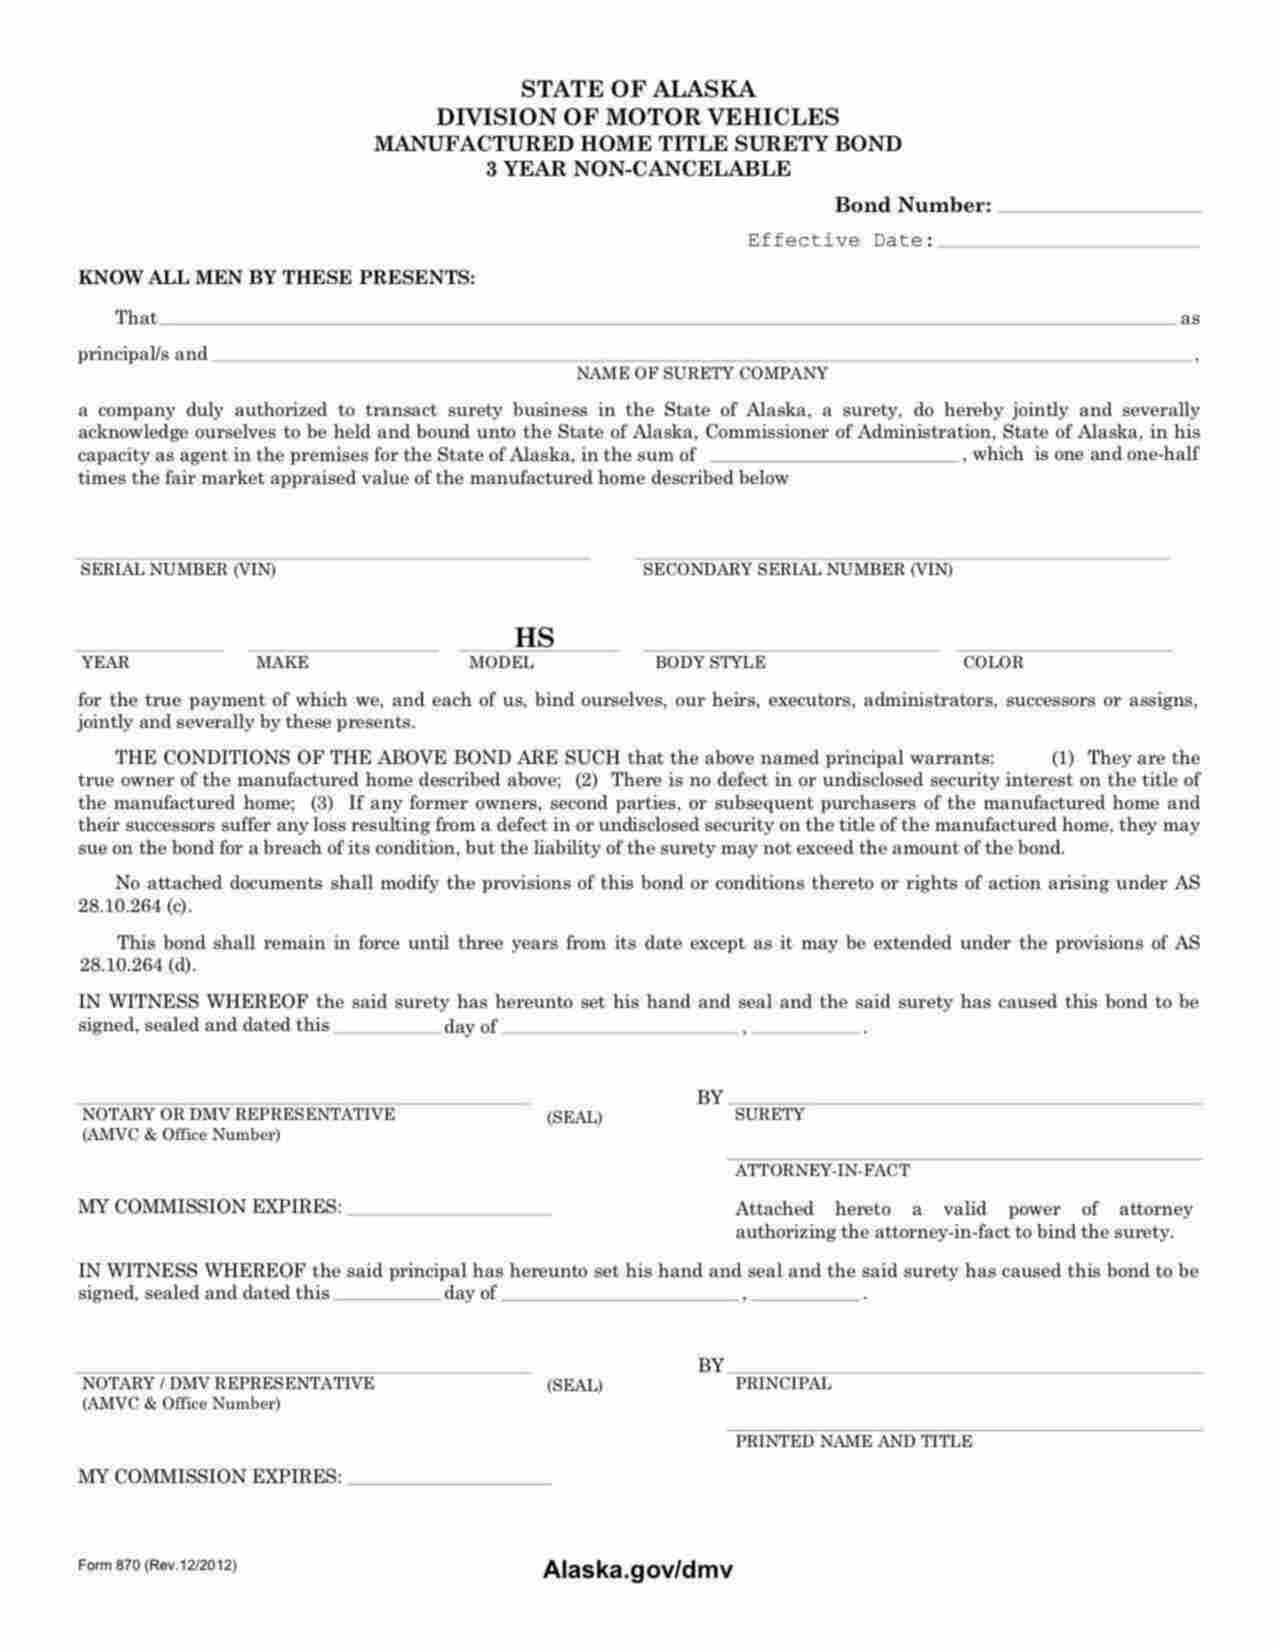 Alaska Manufactured Home Certificate of Title Bond Form